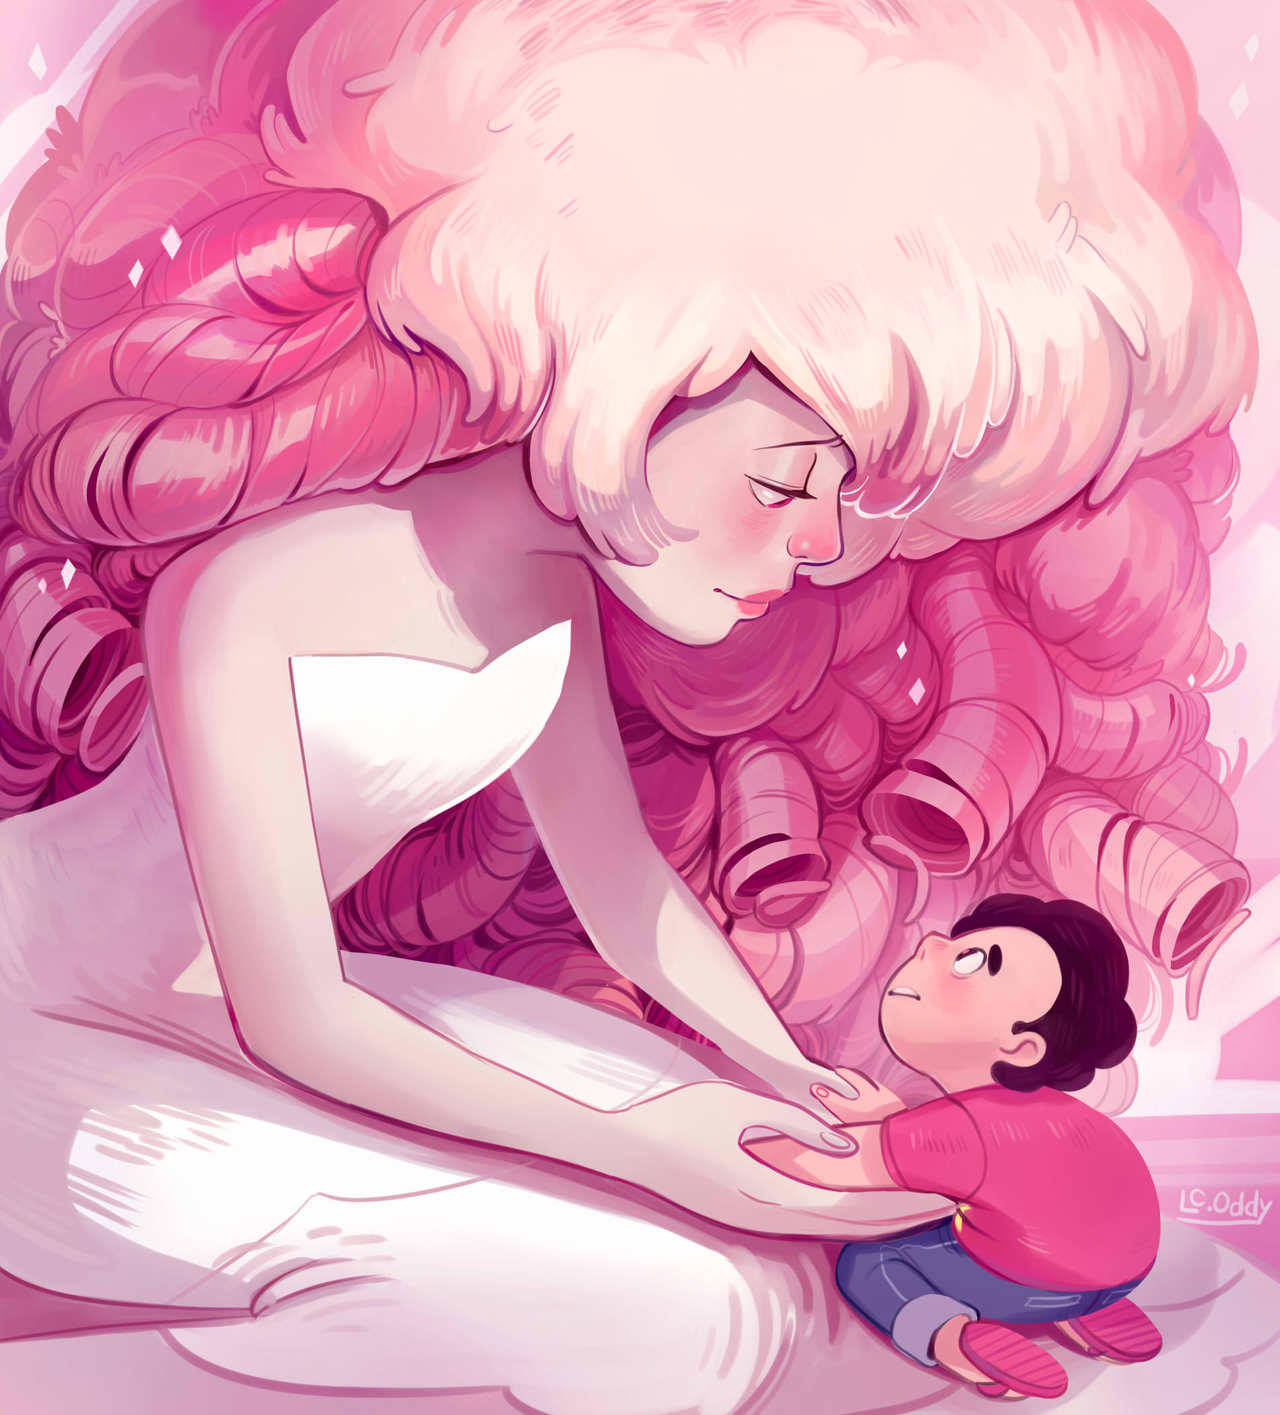 mom was pink diamond